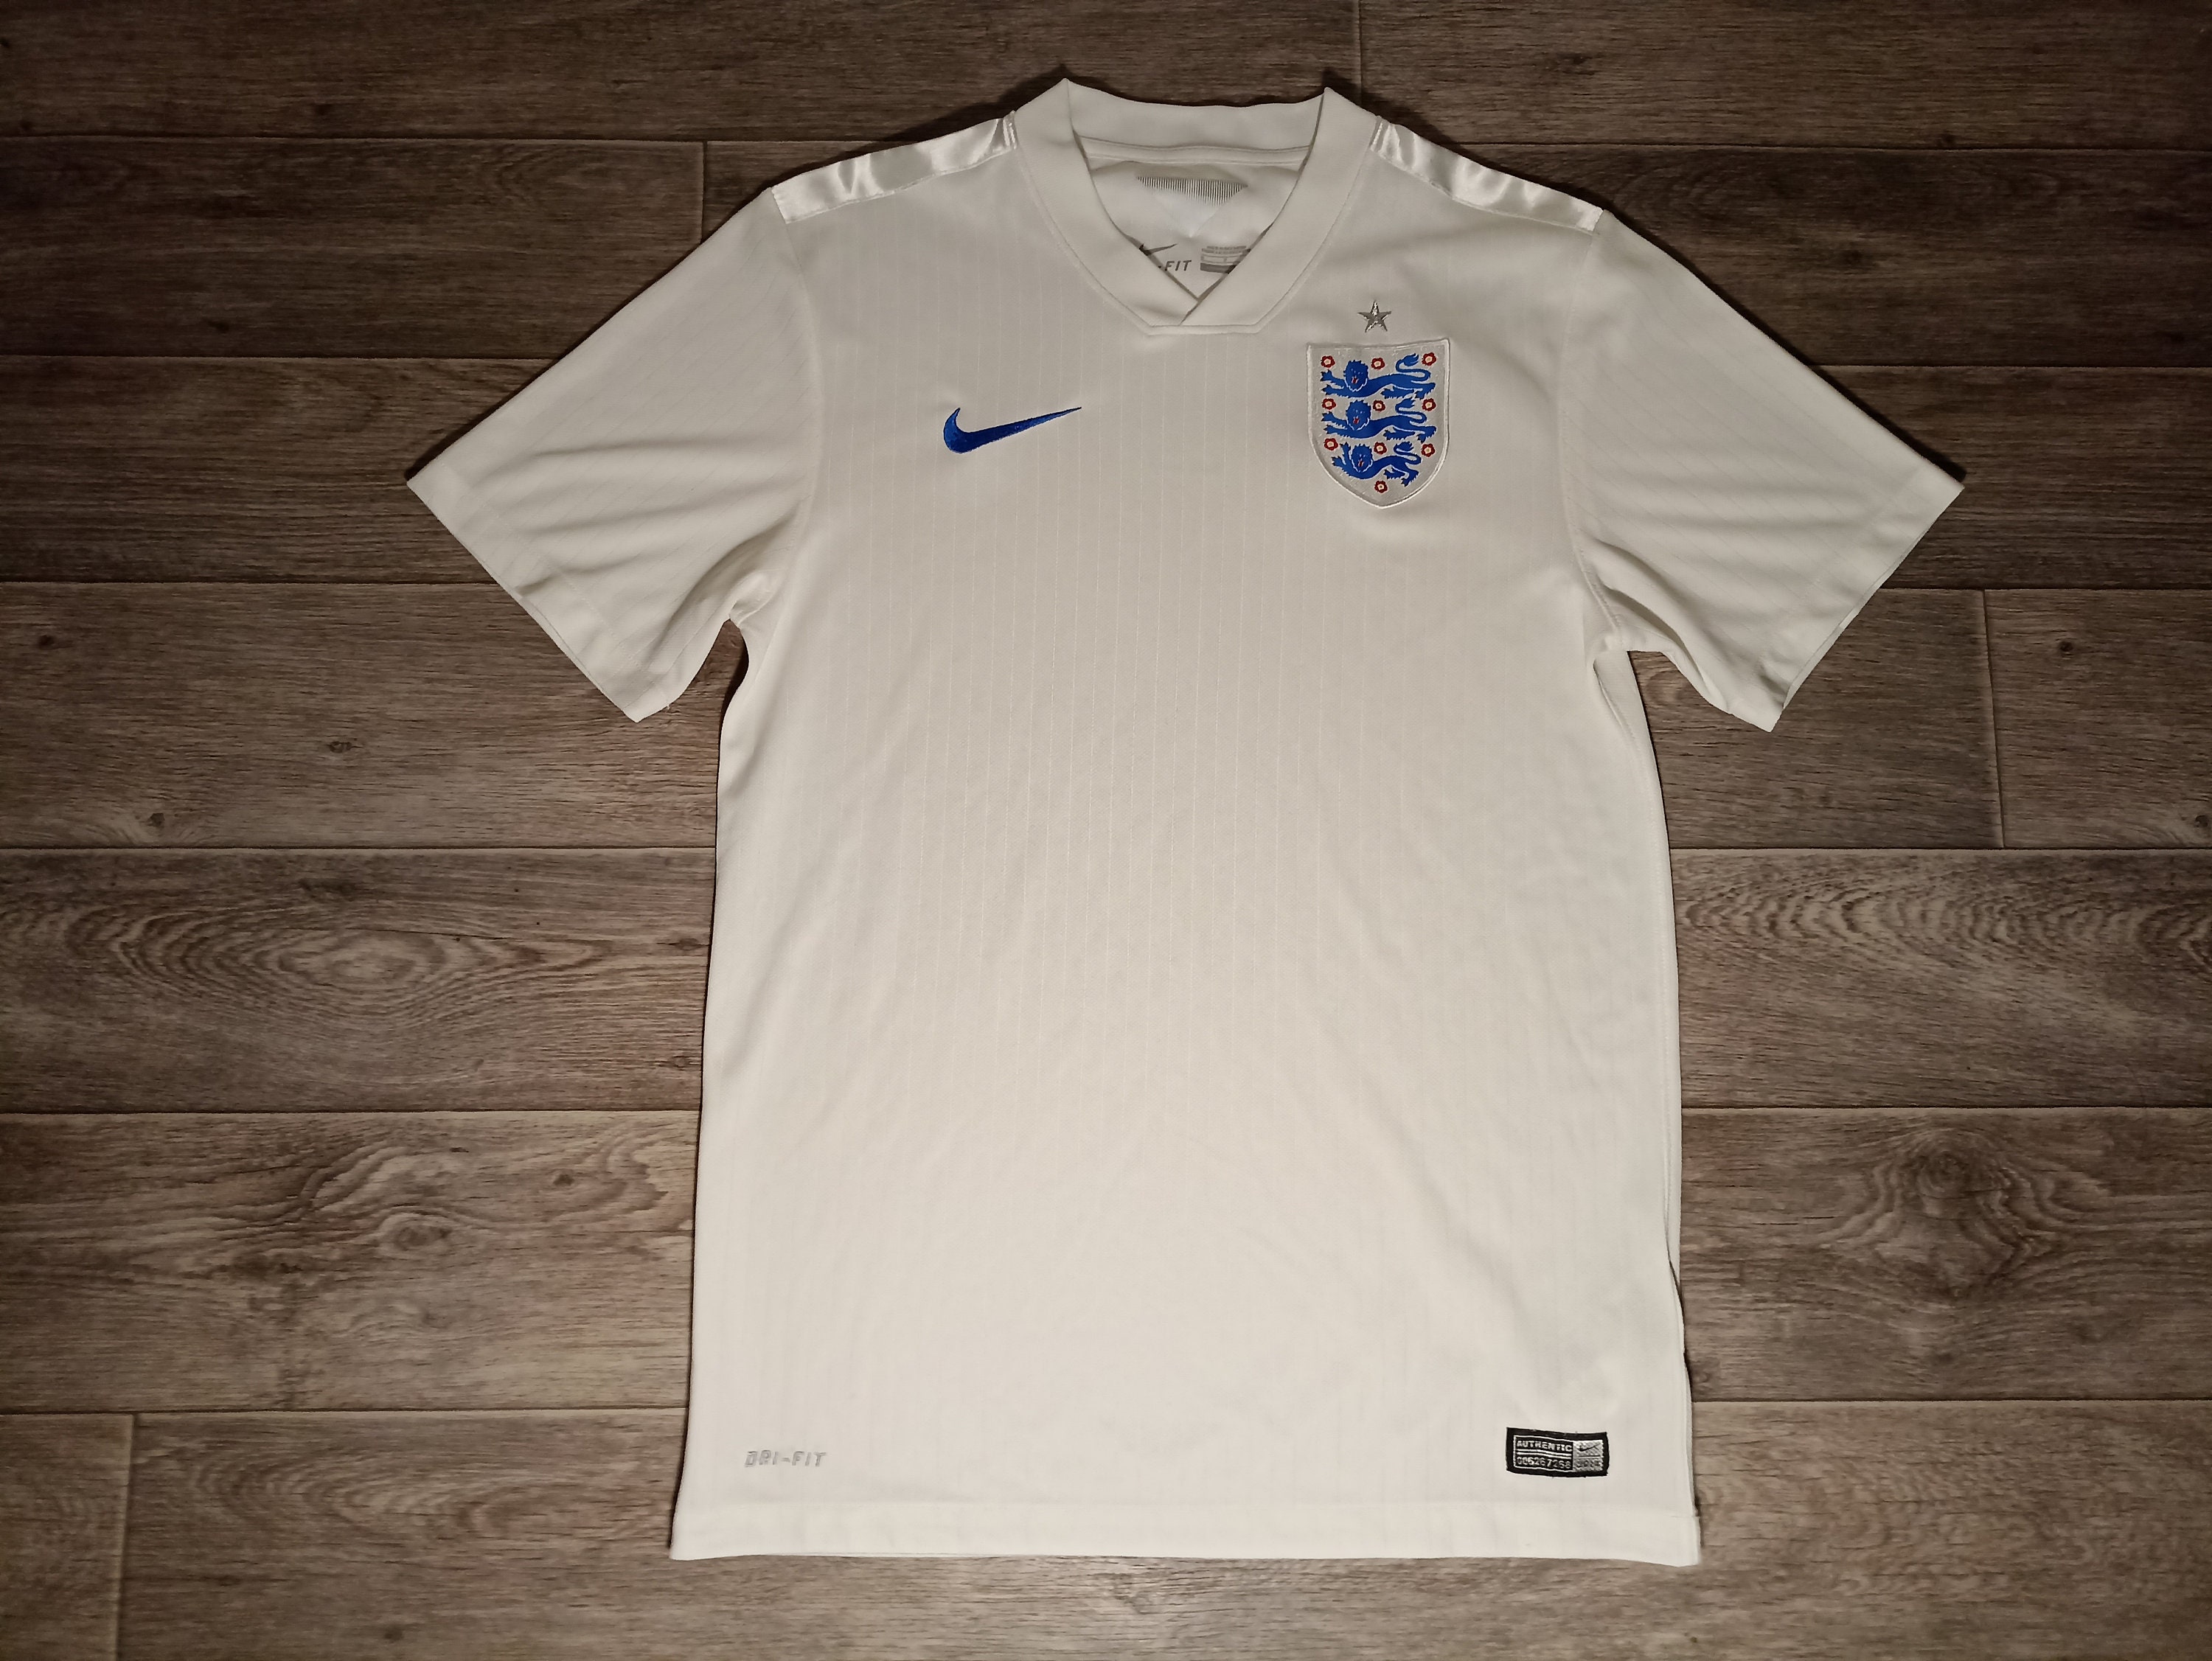 England National Team Three Lions English Nike 2014/15 World Cup White  Football Soccer Sports Men's Uniform Shirt Jersey Knitwear Size S 